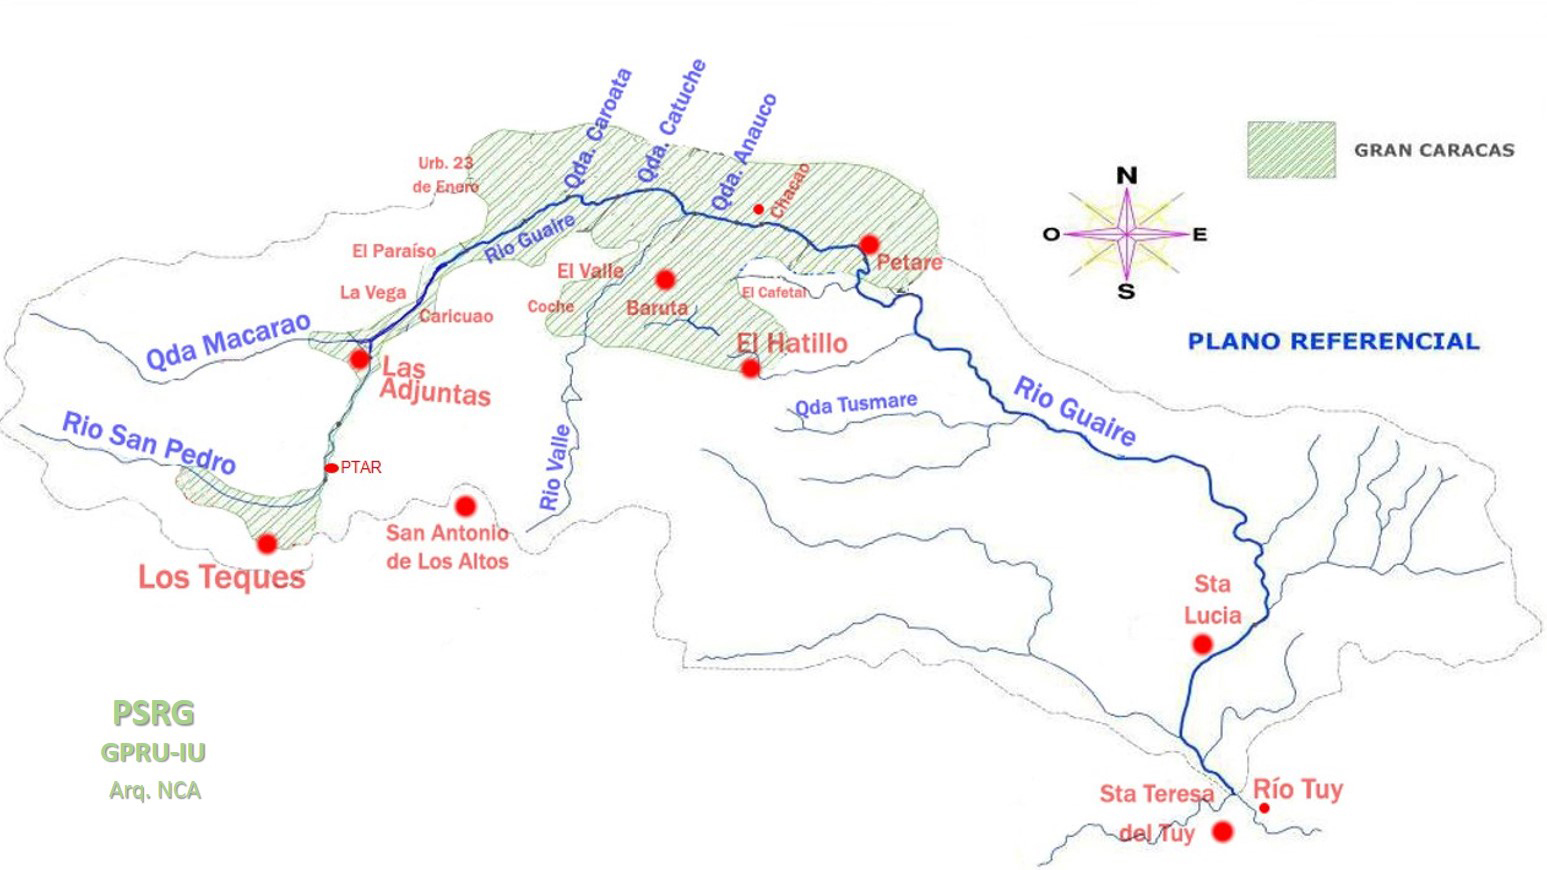 Plano río Guaire